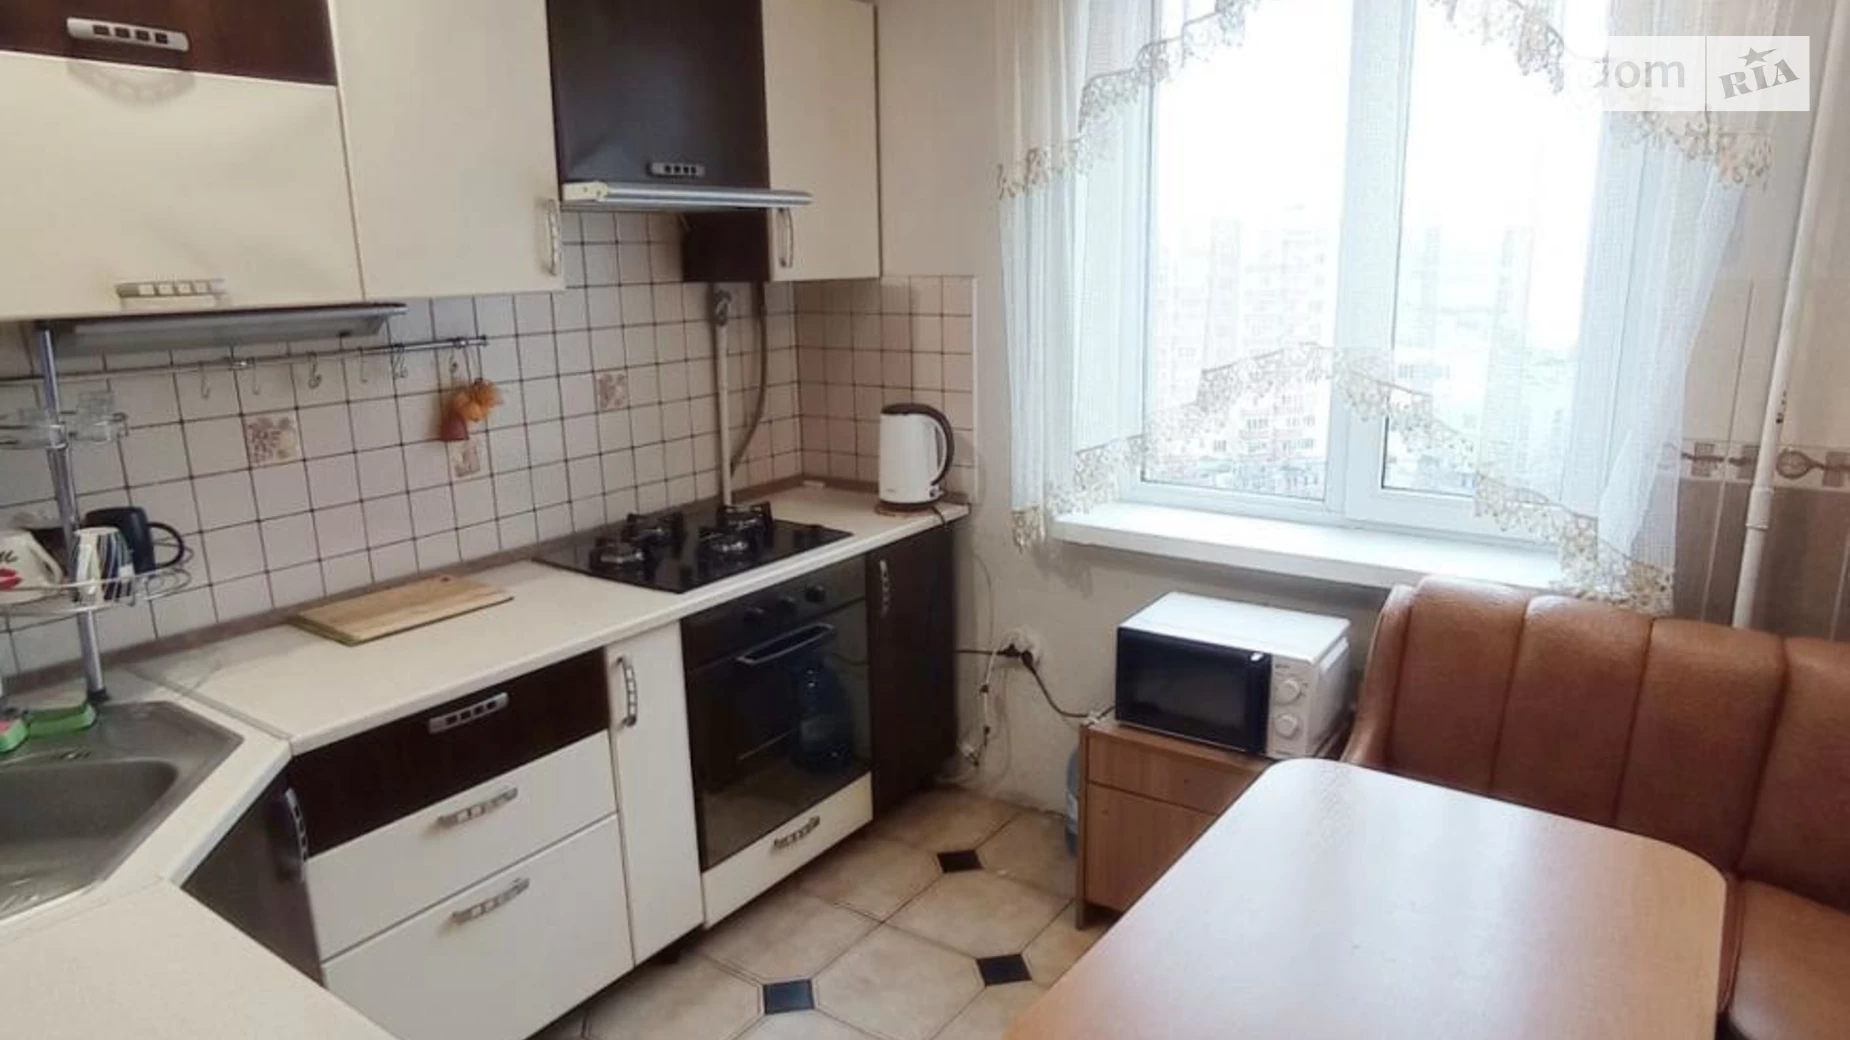 Продається 3-кімнатна квартира 75 кв. м у Хмельницькому, вул. Панаса Мирного